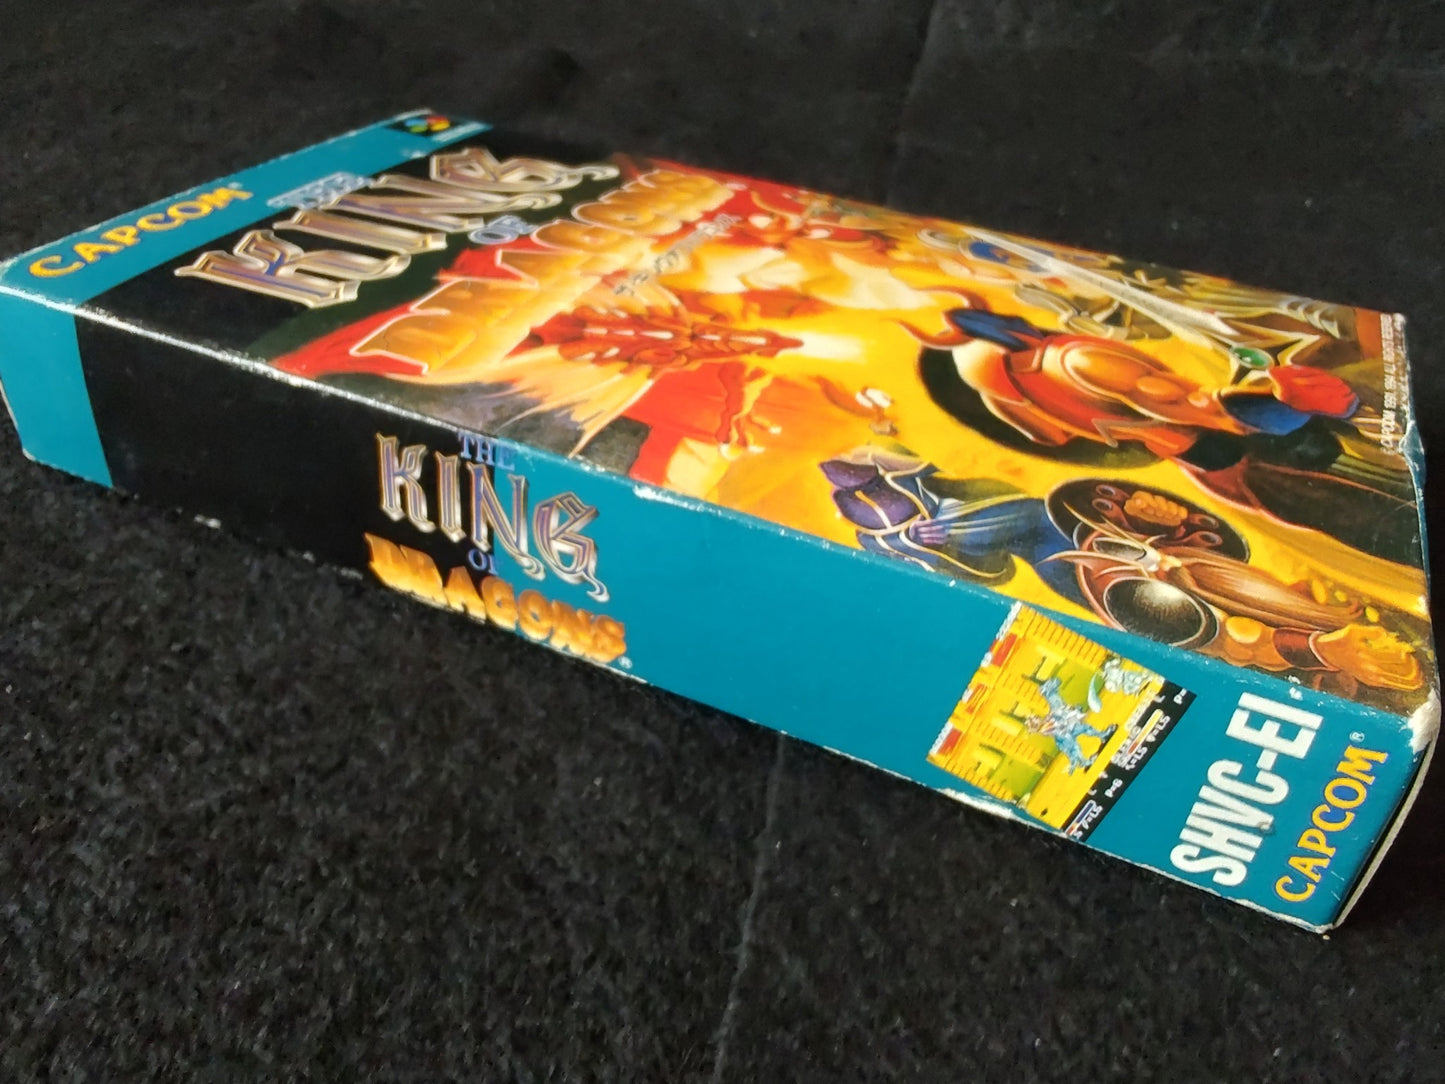 King of Dragons Super Famicom Game SFC Cartridge w/,Manual, Box,Working-f0725-